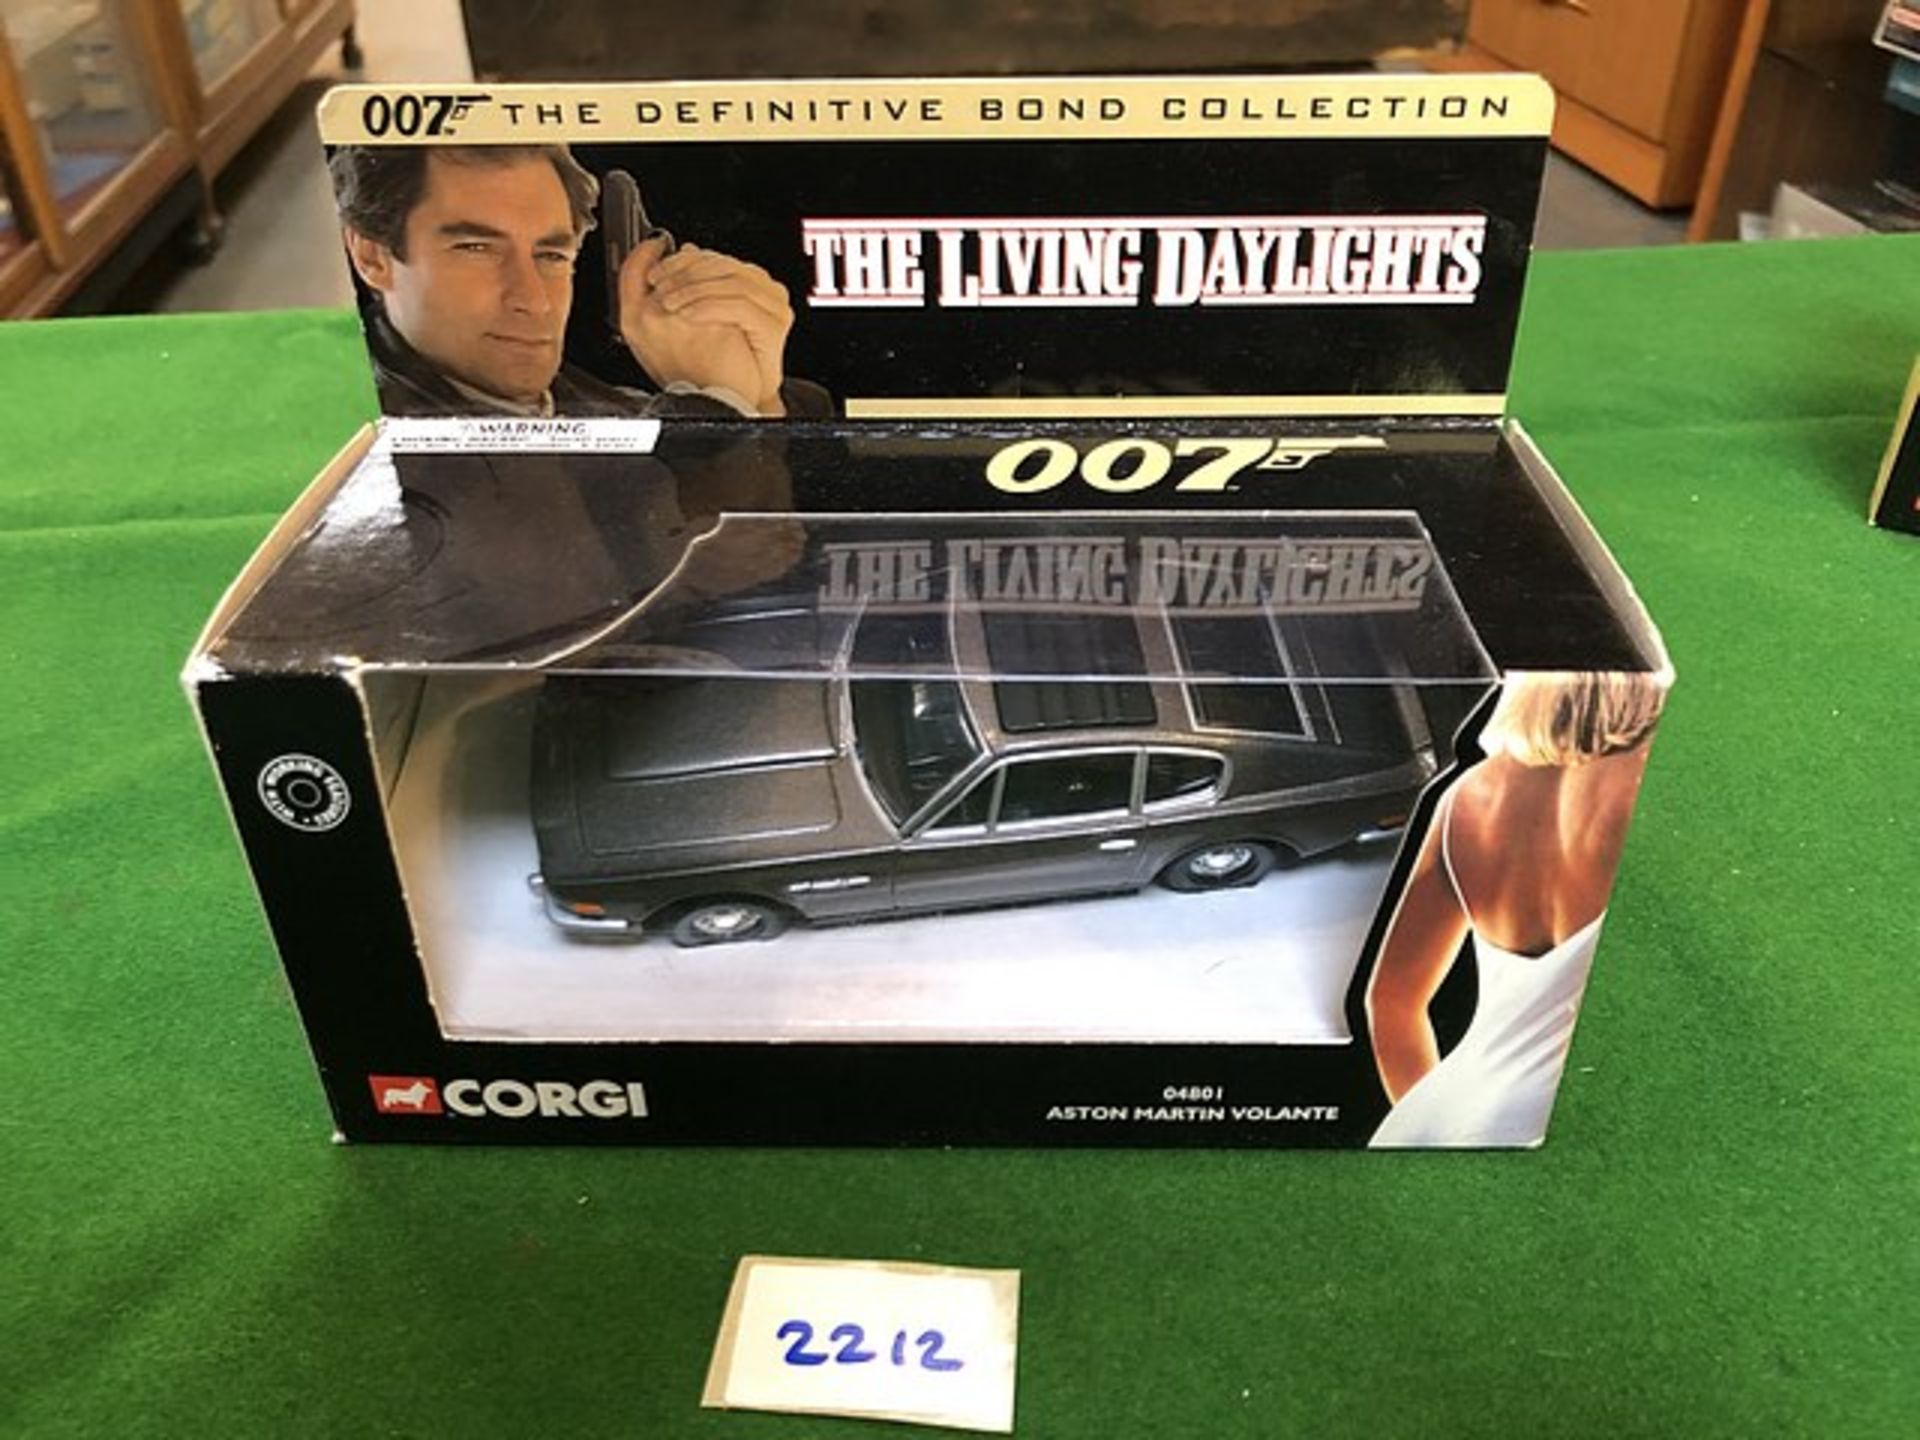 Corgi #04801 James Bond 007 The Definitive Bond Collection Diecast 04801 Aston Martin Volante From